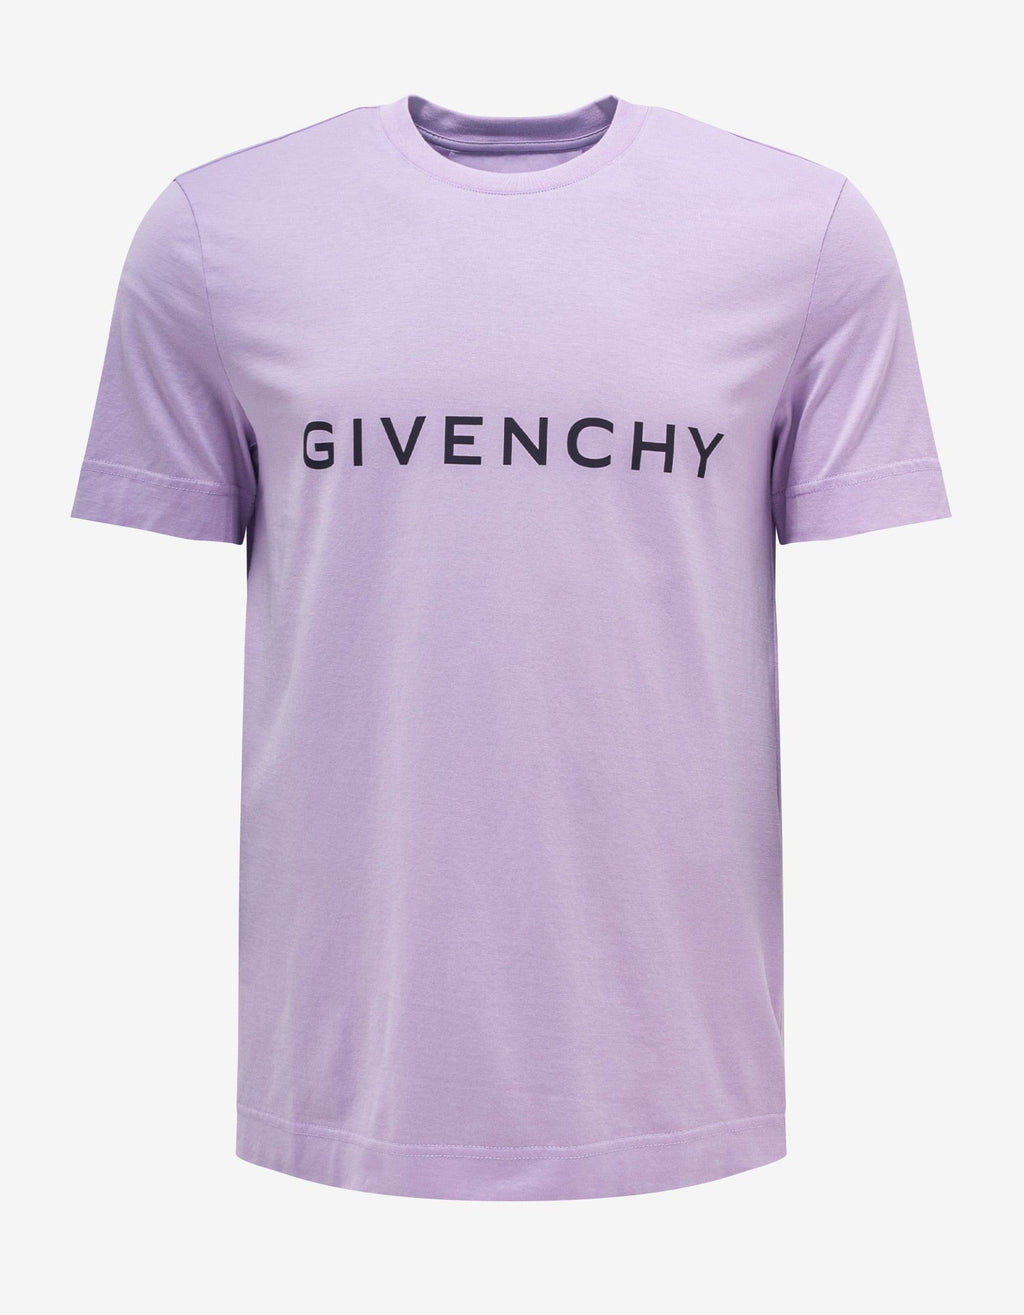 Givenchy Givenchy Purple Archetype Logo T-Shirt